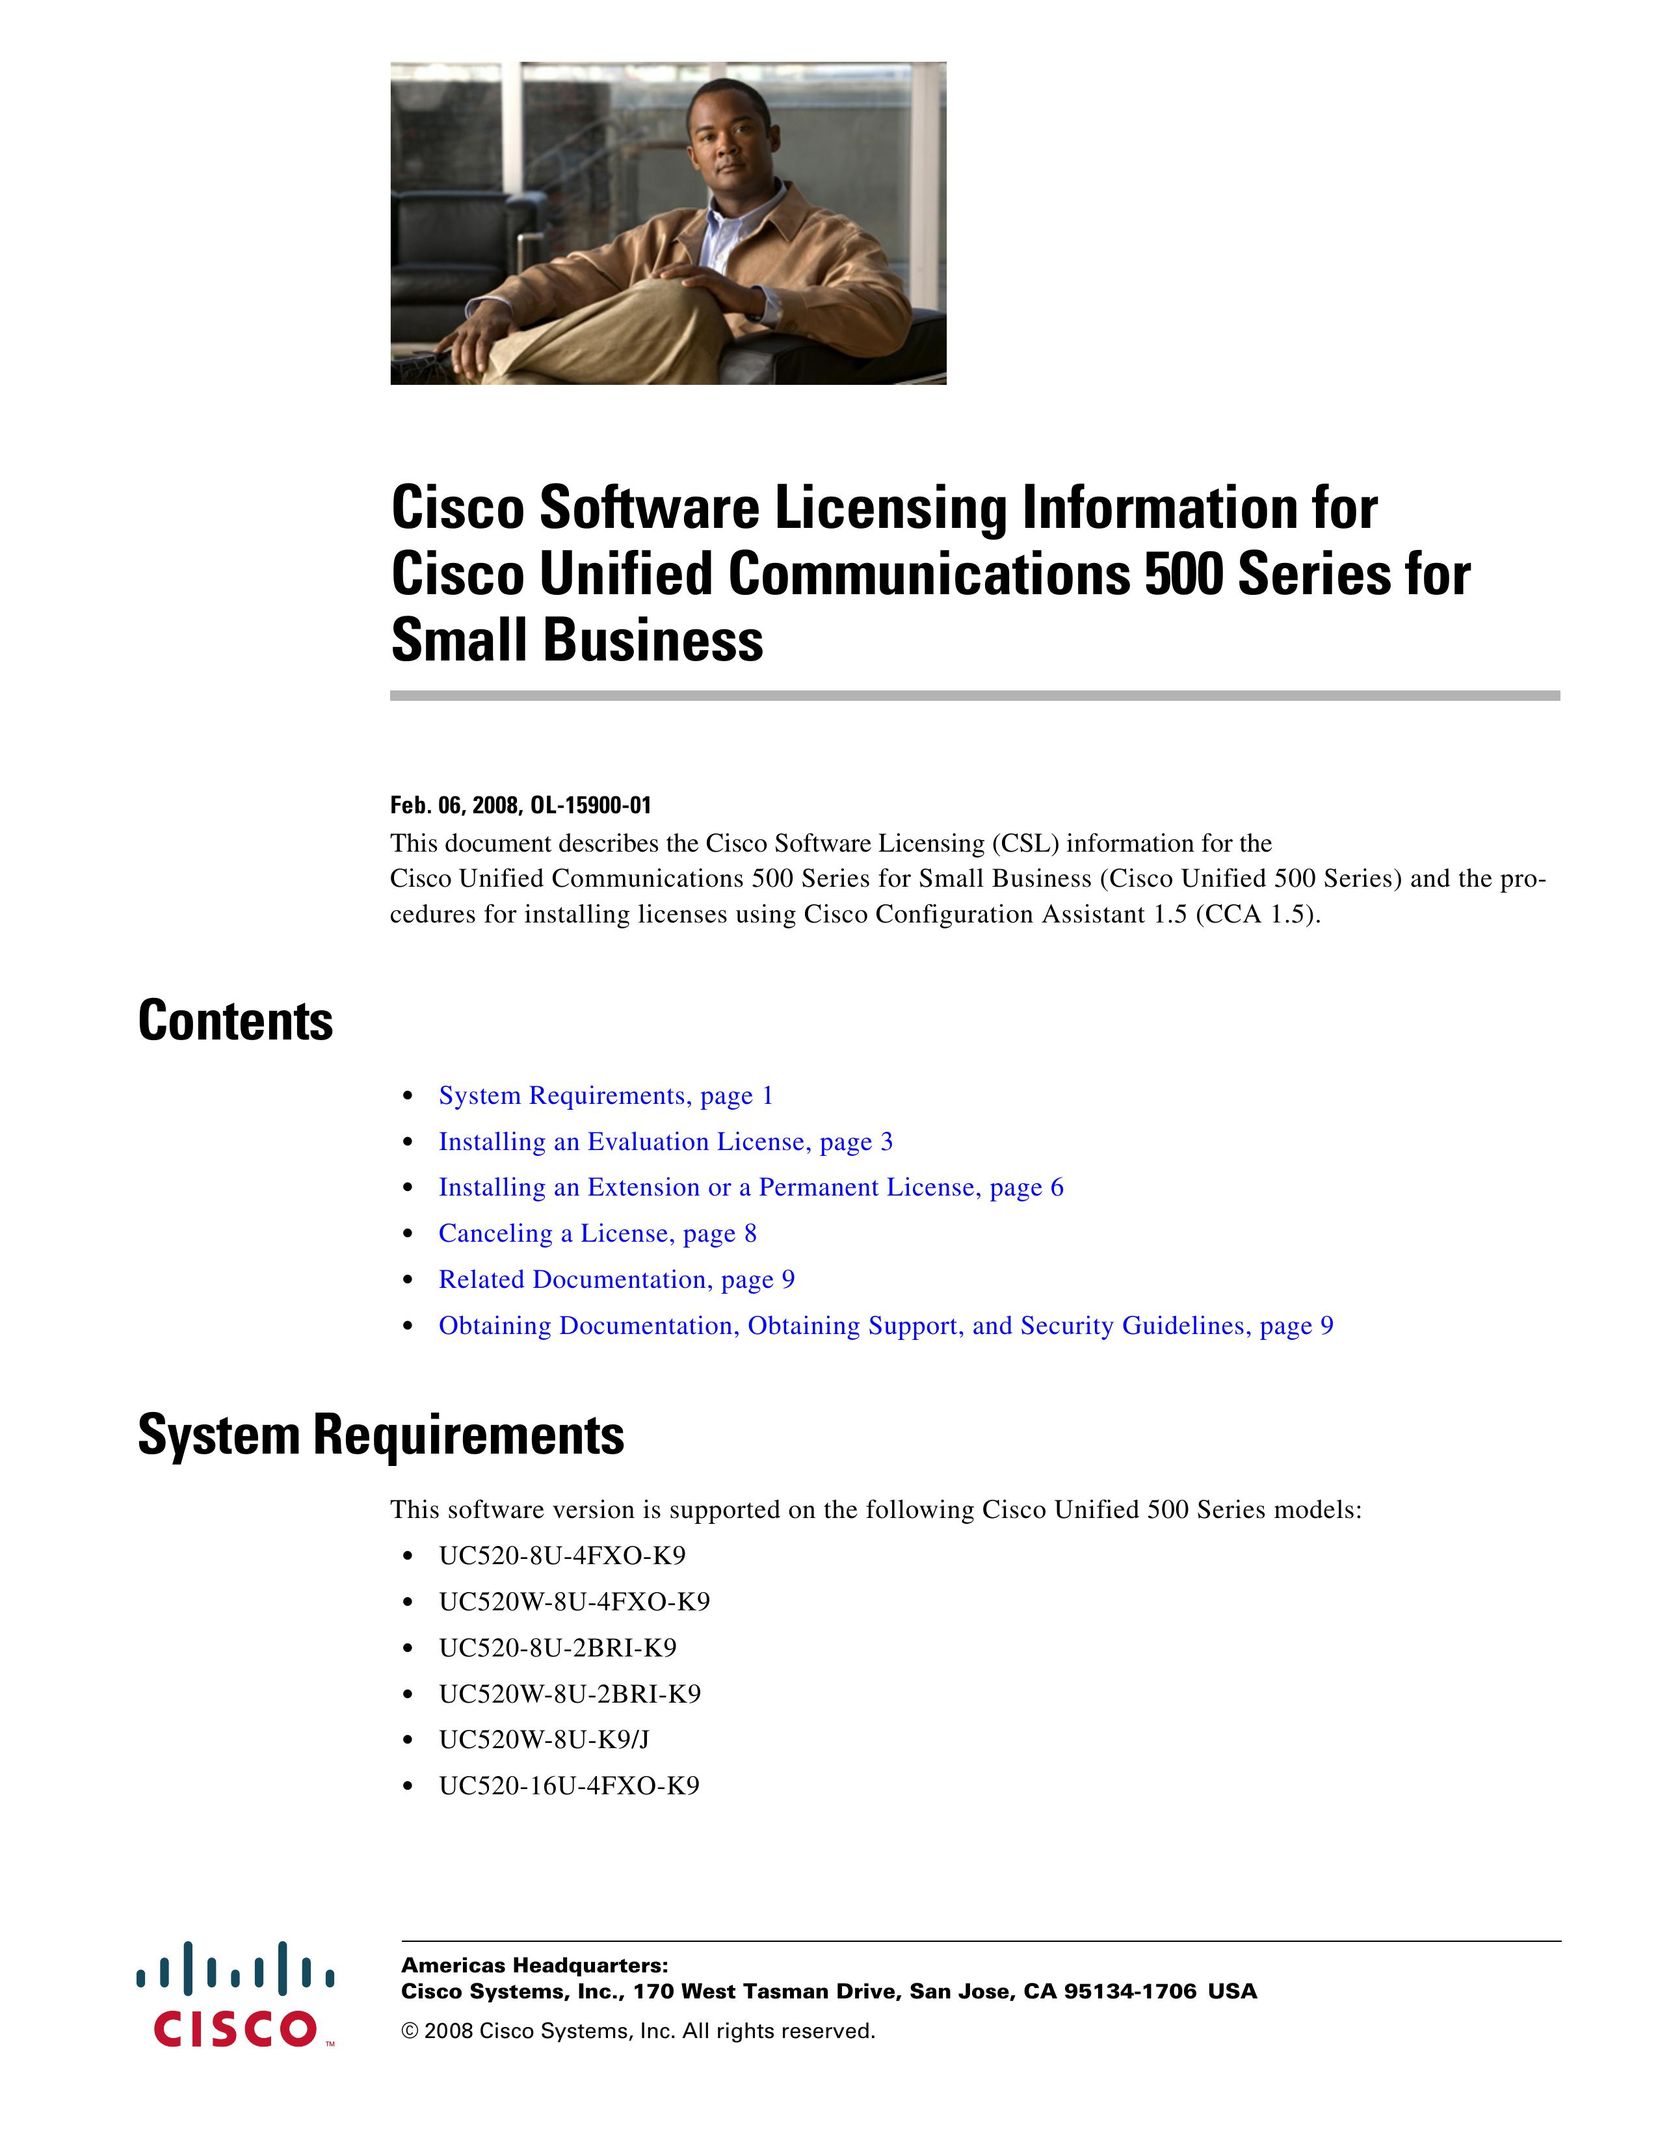 Cisco Systems UC520W8U2BRIK9 Computer Hardware User Manual